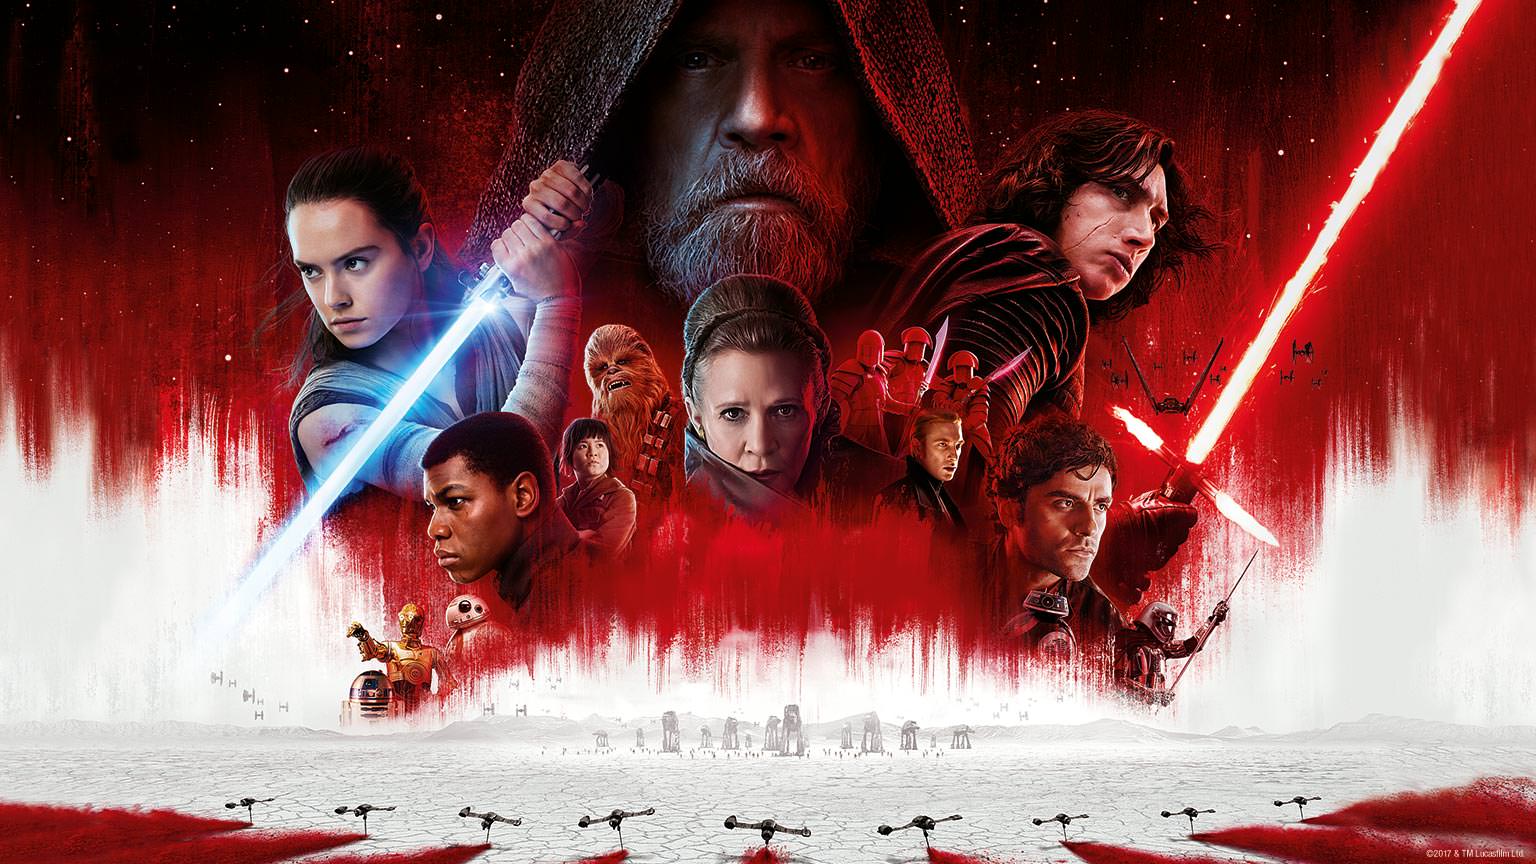 Star Wars Episode VIII: The Last Jedi. The Best Post-Disney Star Wars Film